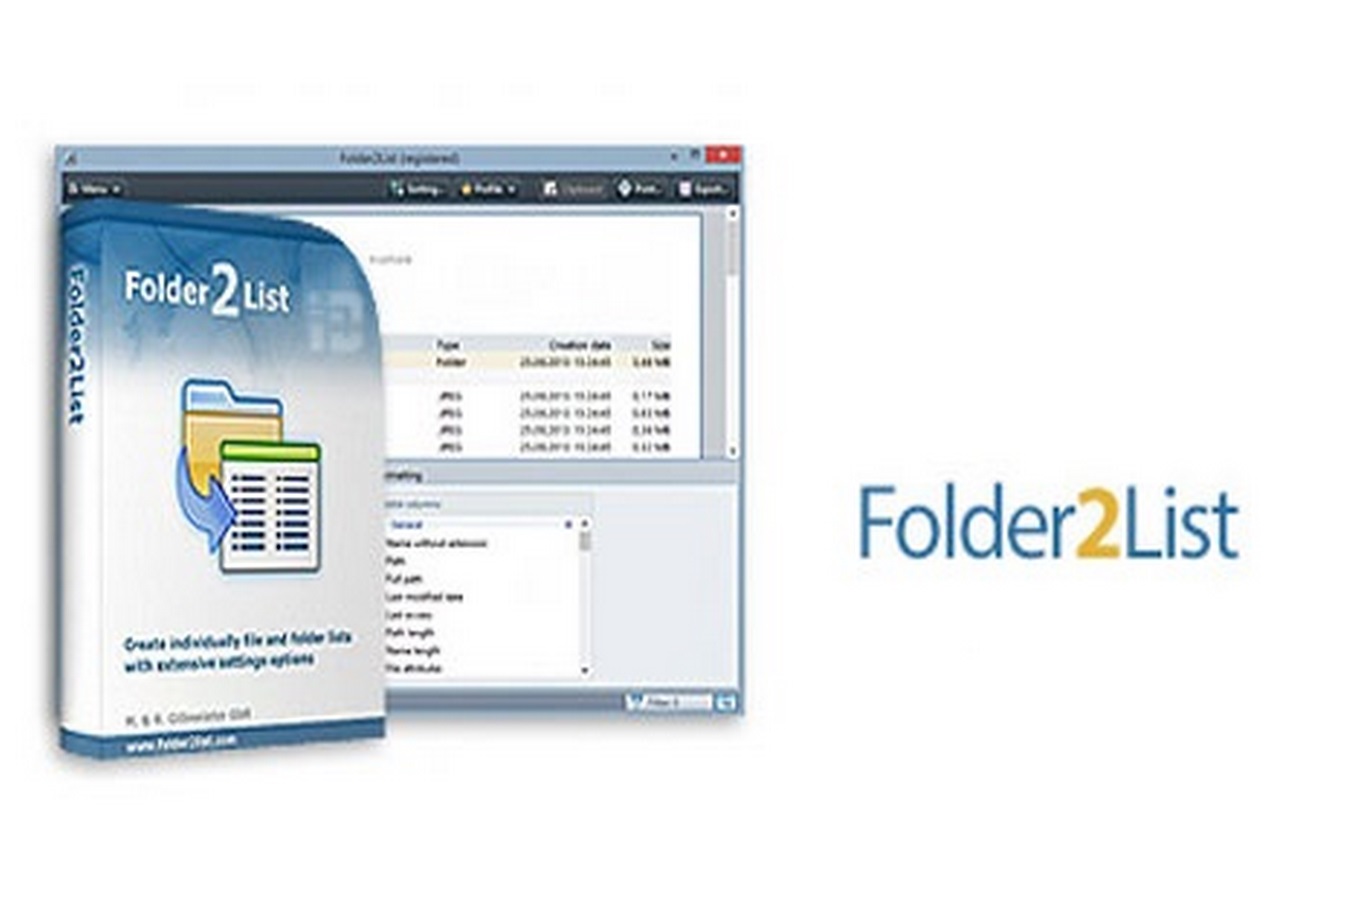 Folder2List 3.27.1 instal the new version for mac